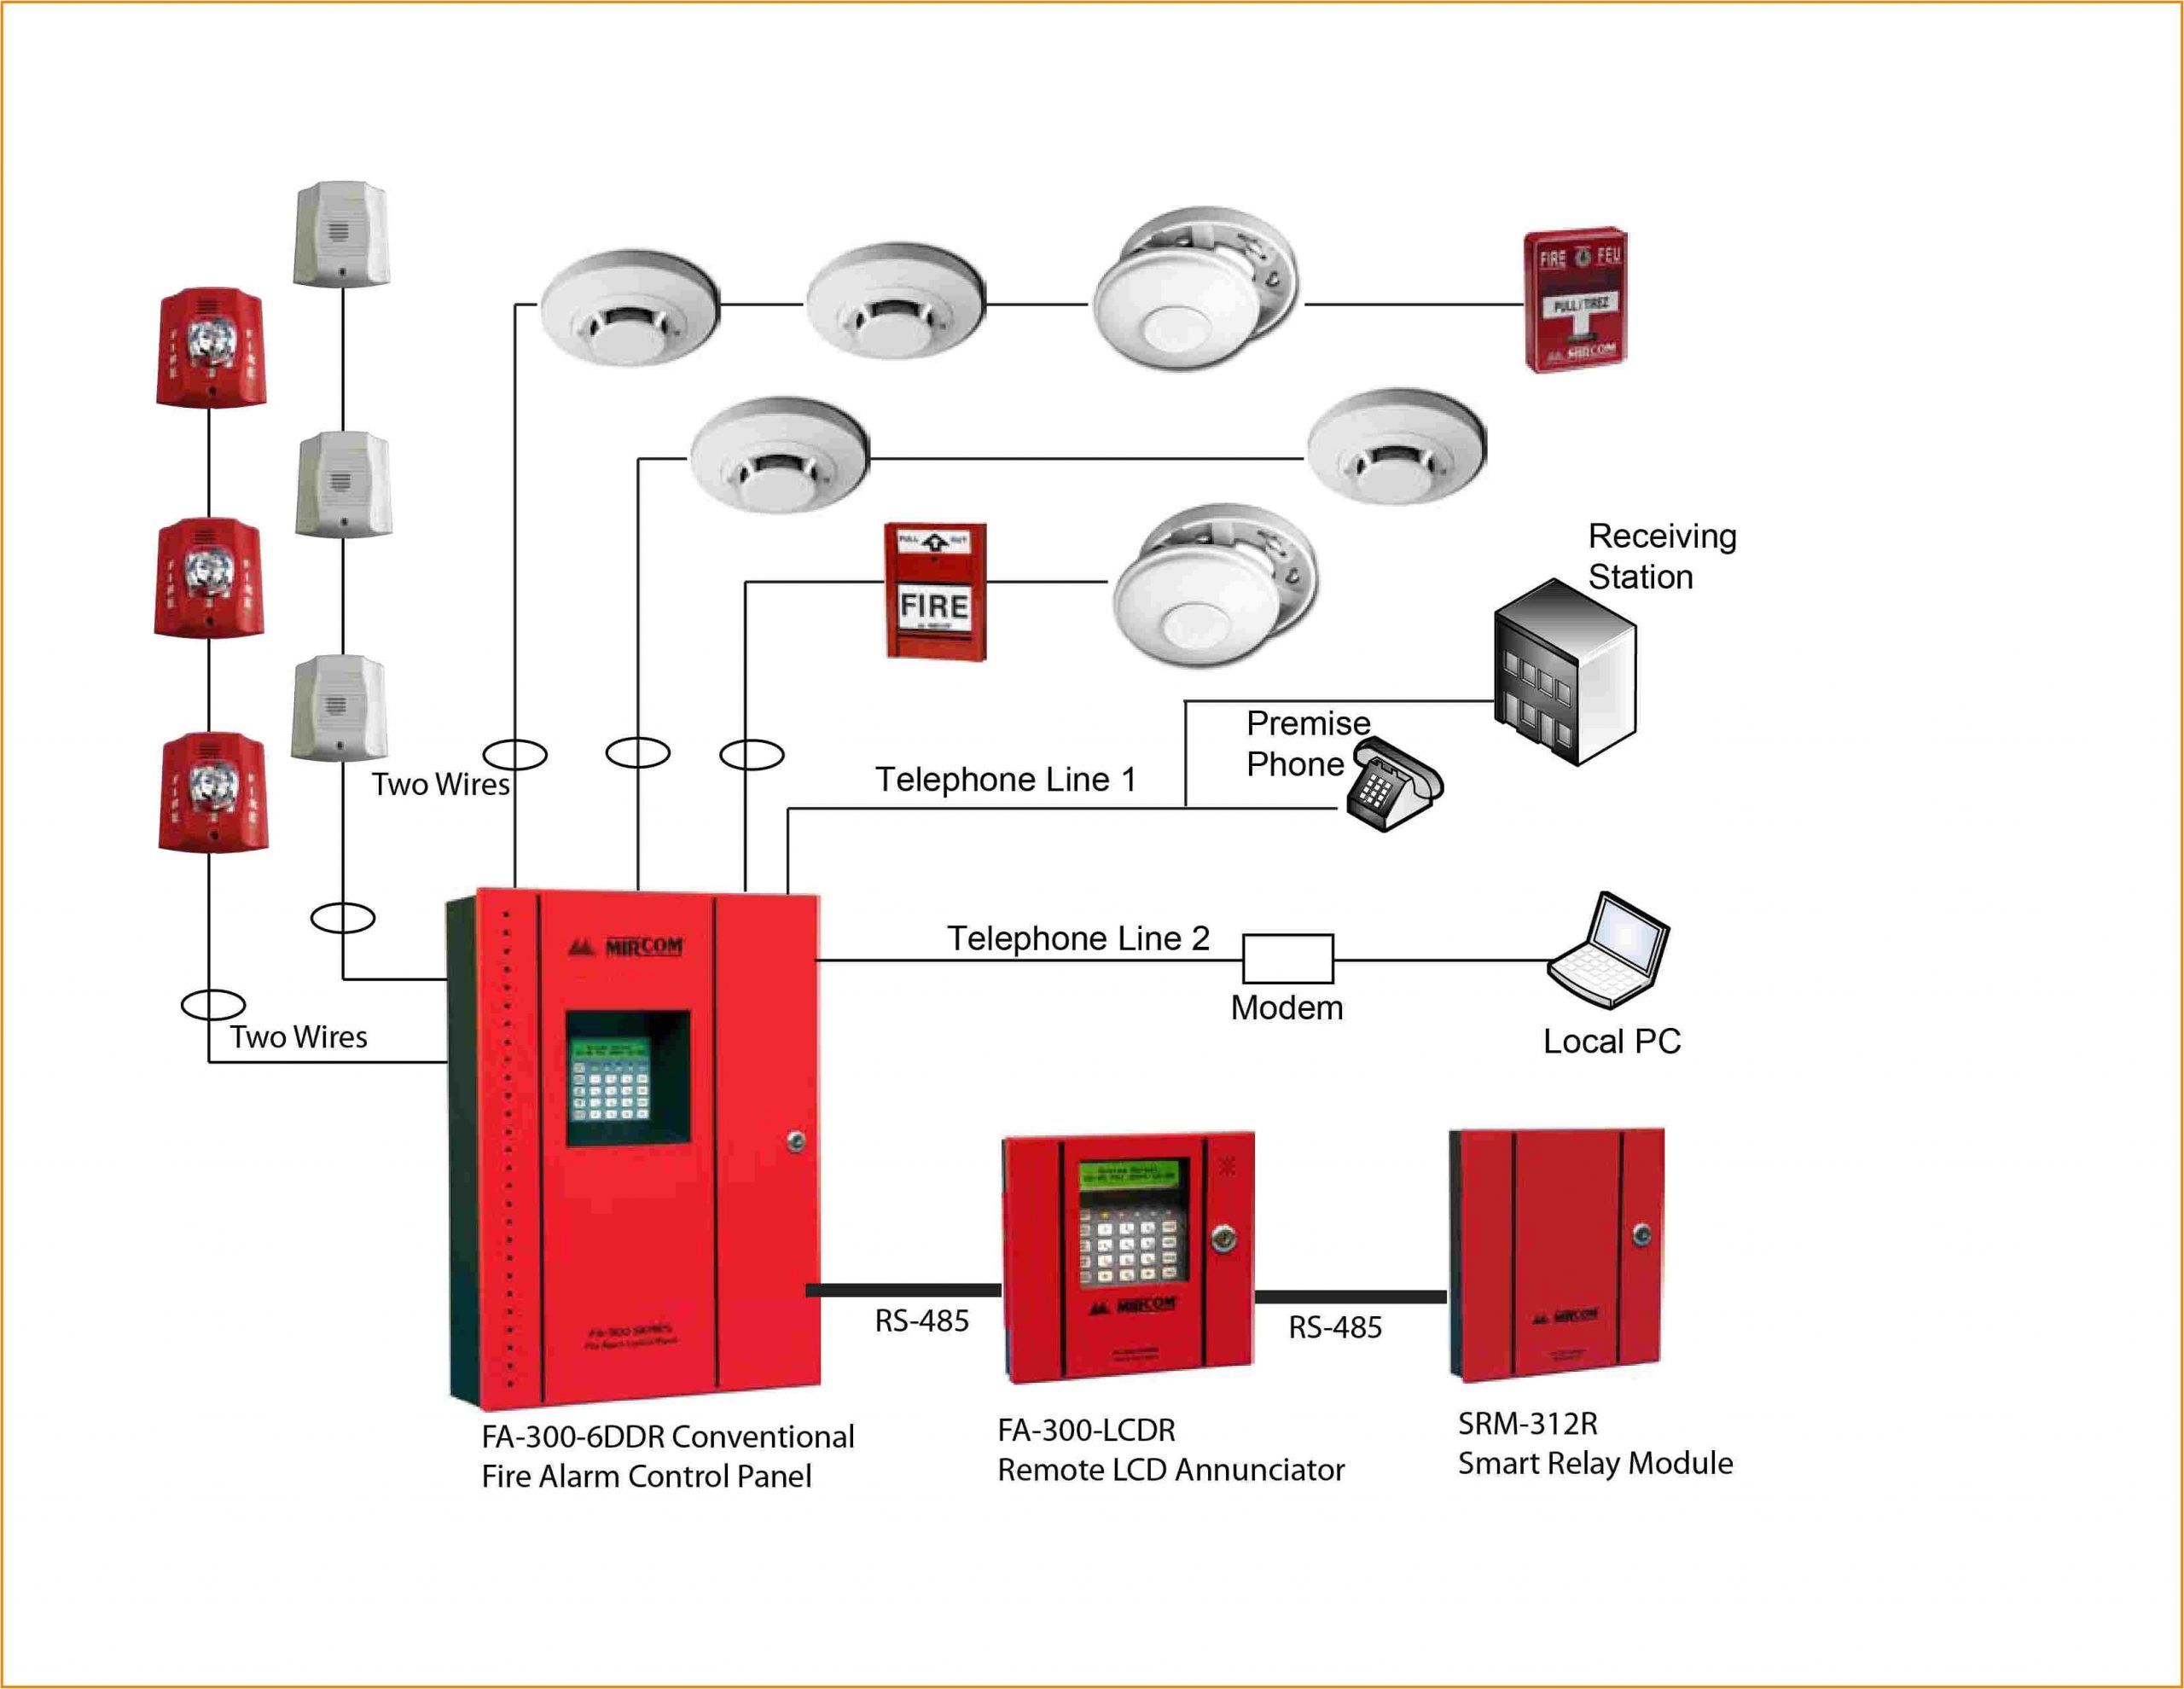 fire alarm addressable system wiring diagram pdf new system sensor smoke detector wiring diagram simple system sensor of fire alarm addressable system wiring diagram pdf png